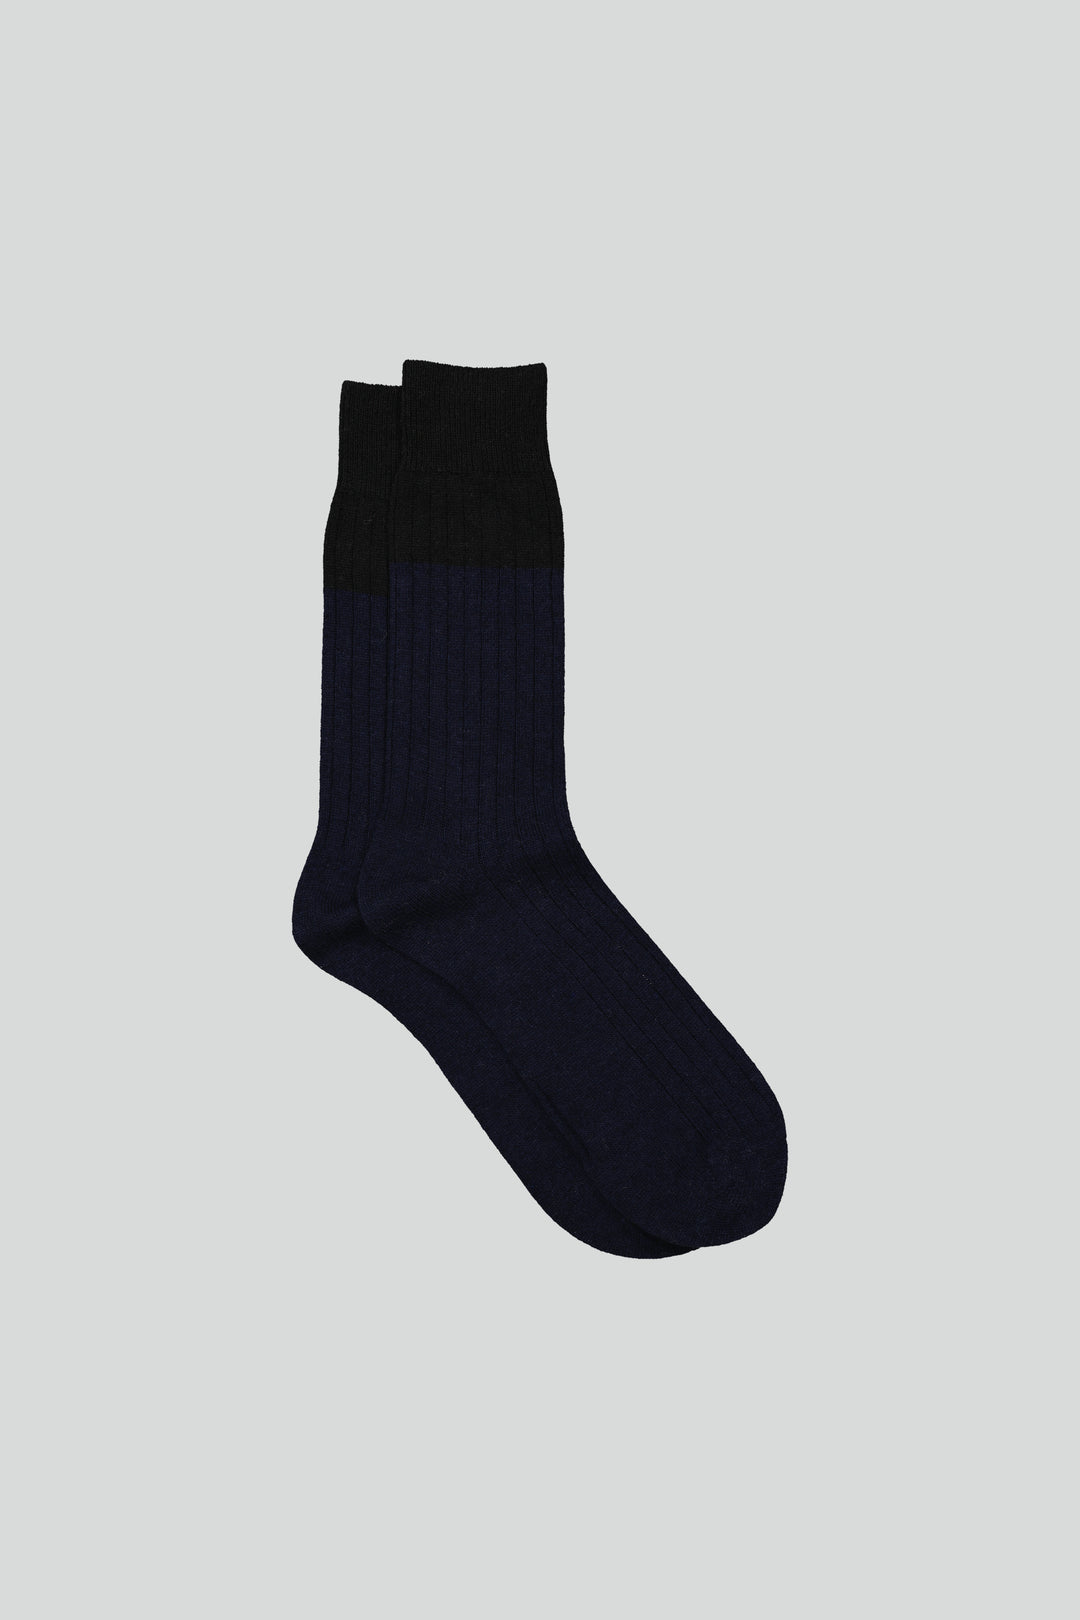 NN07 Sock Ten 9138 in Navy Blue | Buster McGee